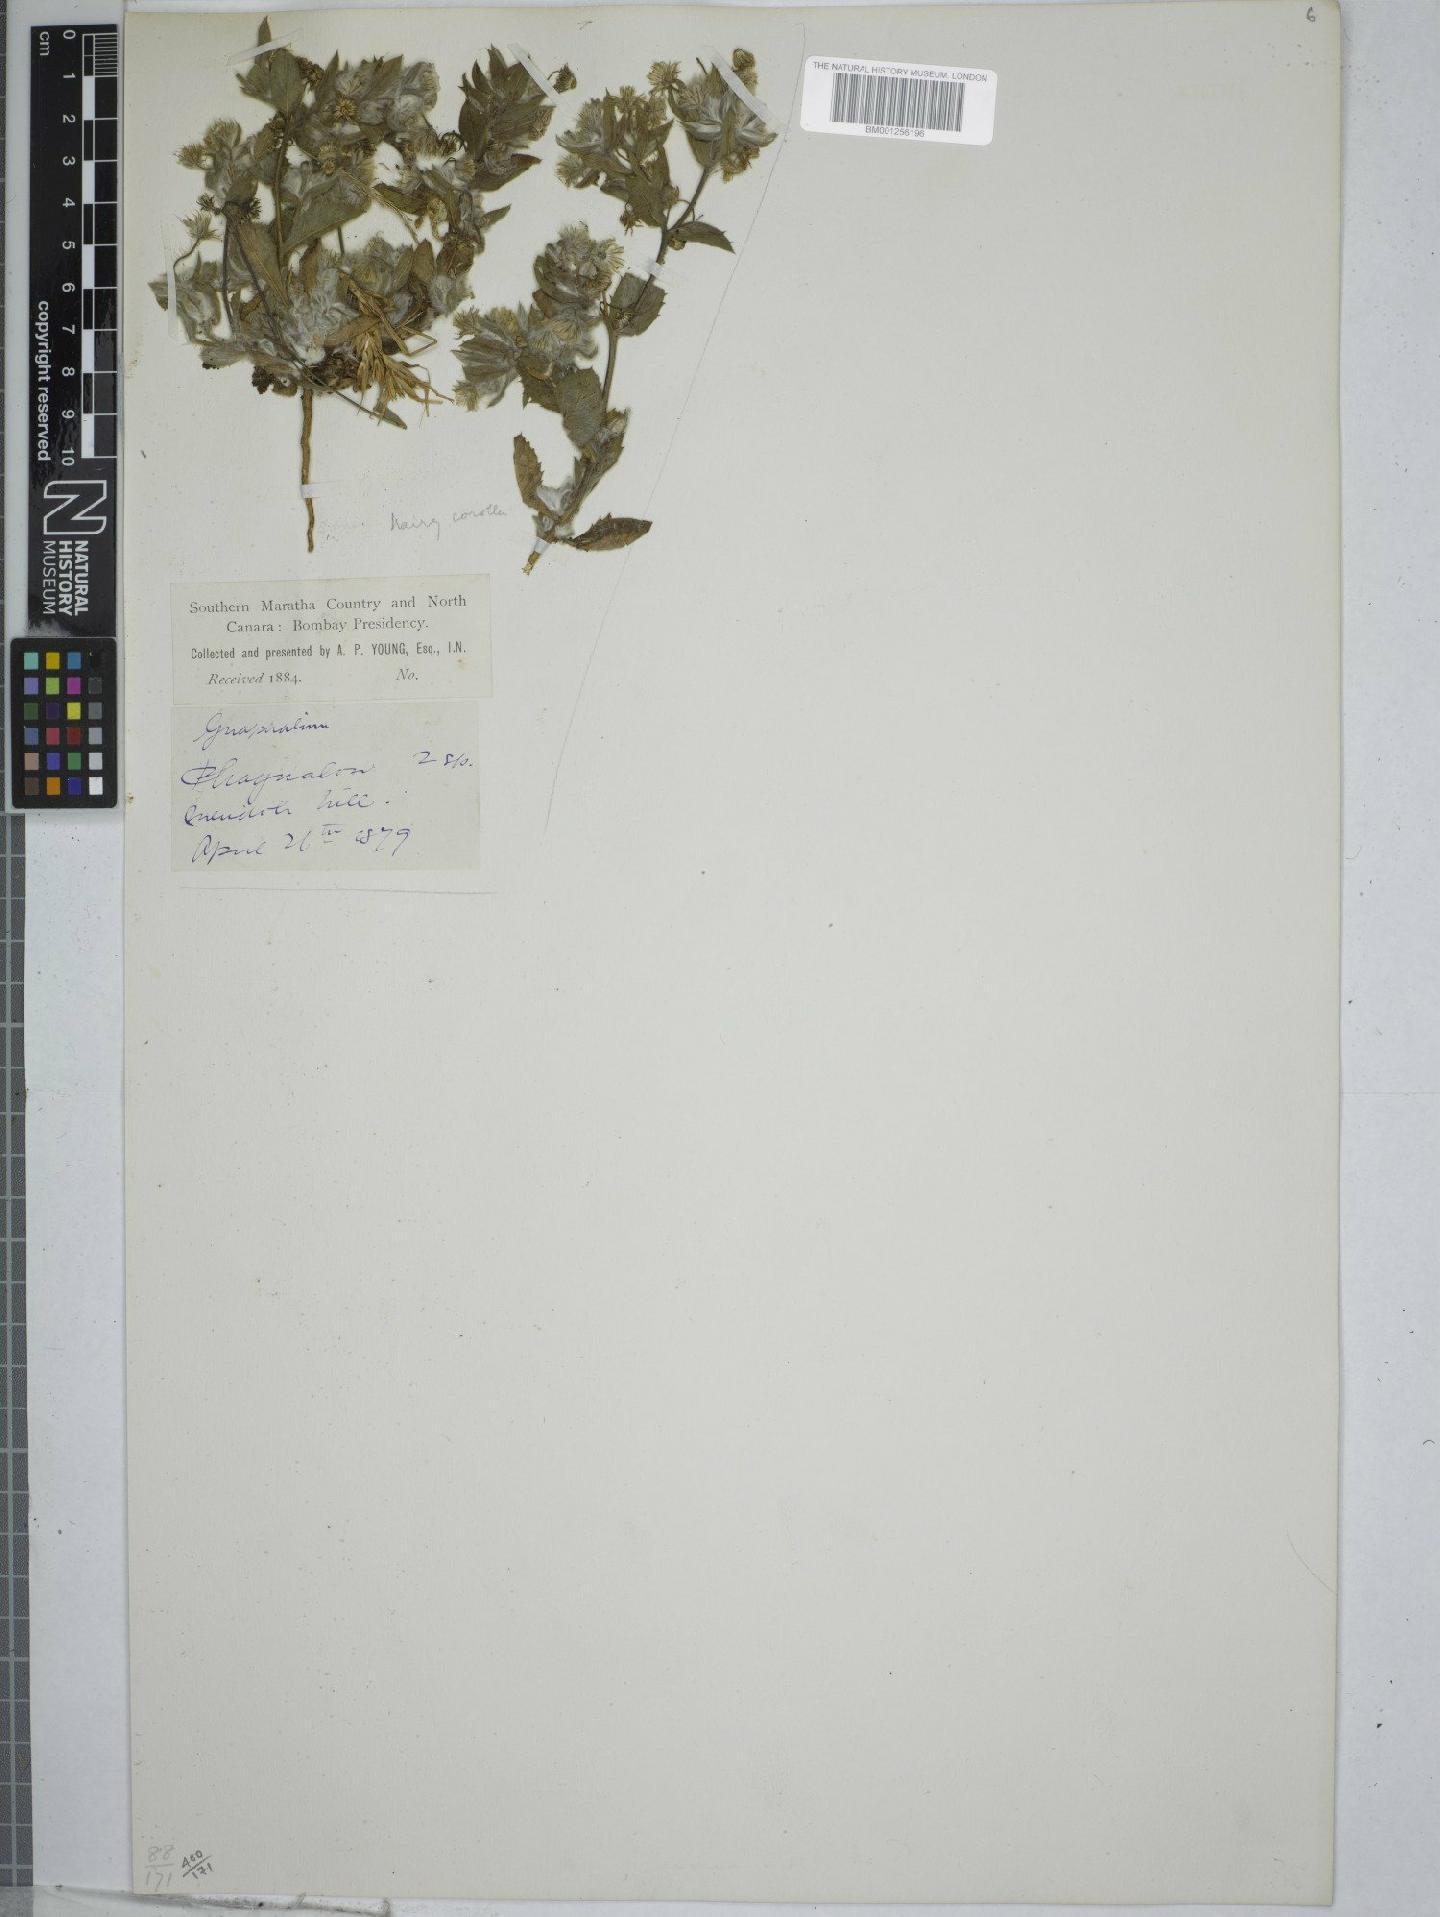 To NHMUK collection (Blumea oxyodonta DC.; NHMUK:ecatalogue:9151236)